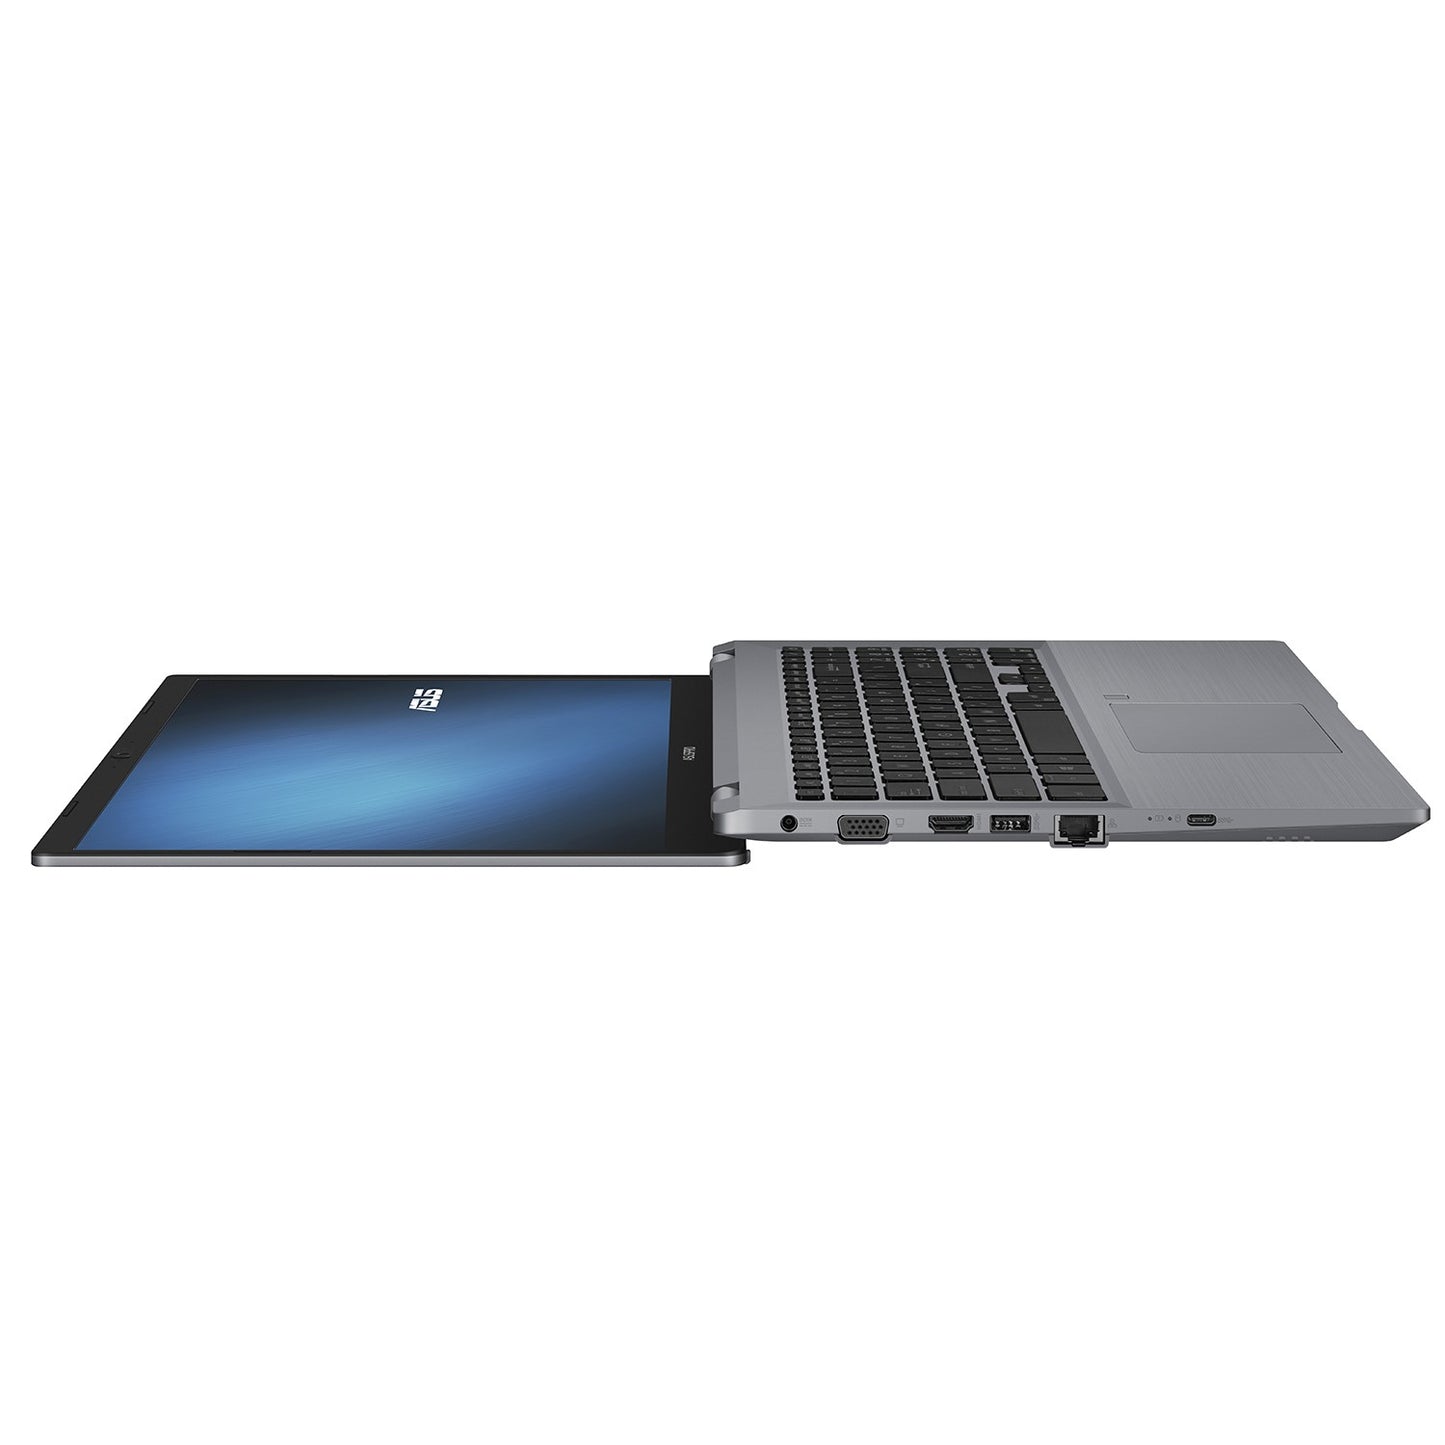 Refurbished Asus ExpertBook Laptop - Intel Core i5 8th Gen CPU - 8GB RAM - 256GB SSD